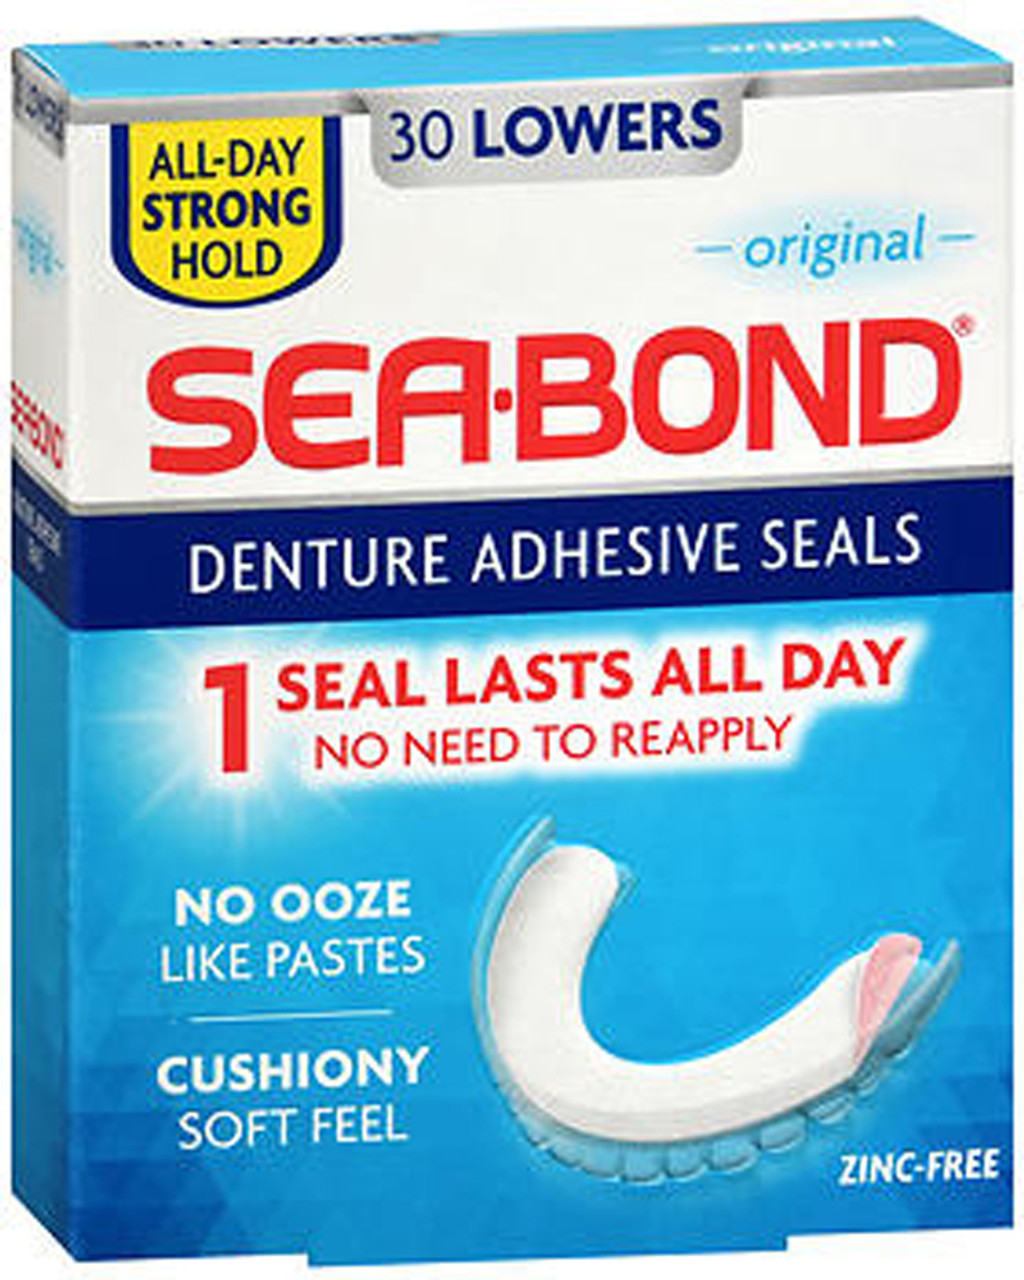 Sea-Bond Lowers Denture Adhesive Seals Fresh Mint - 30 ct